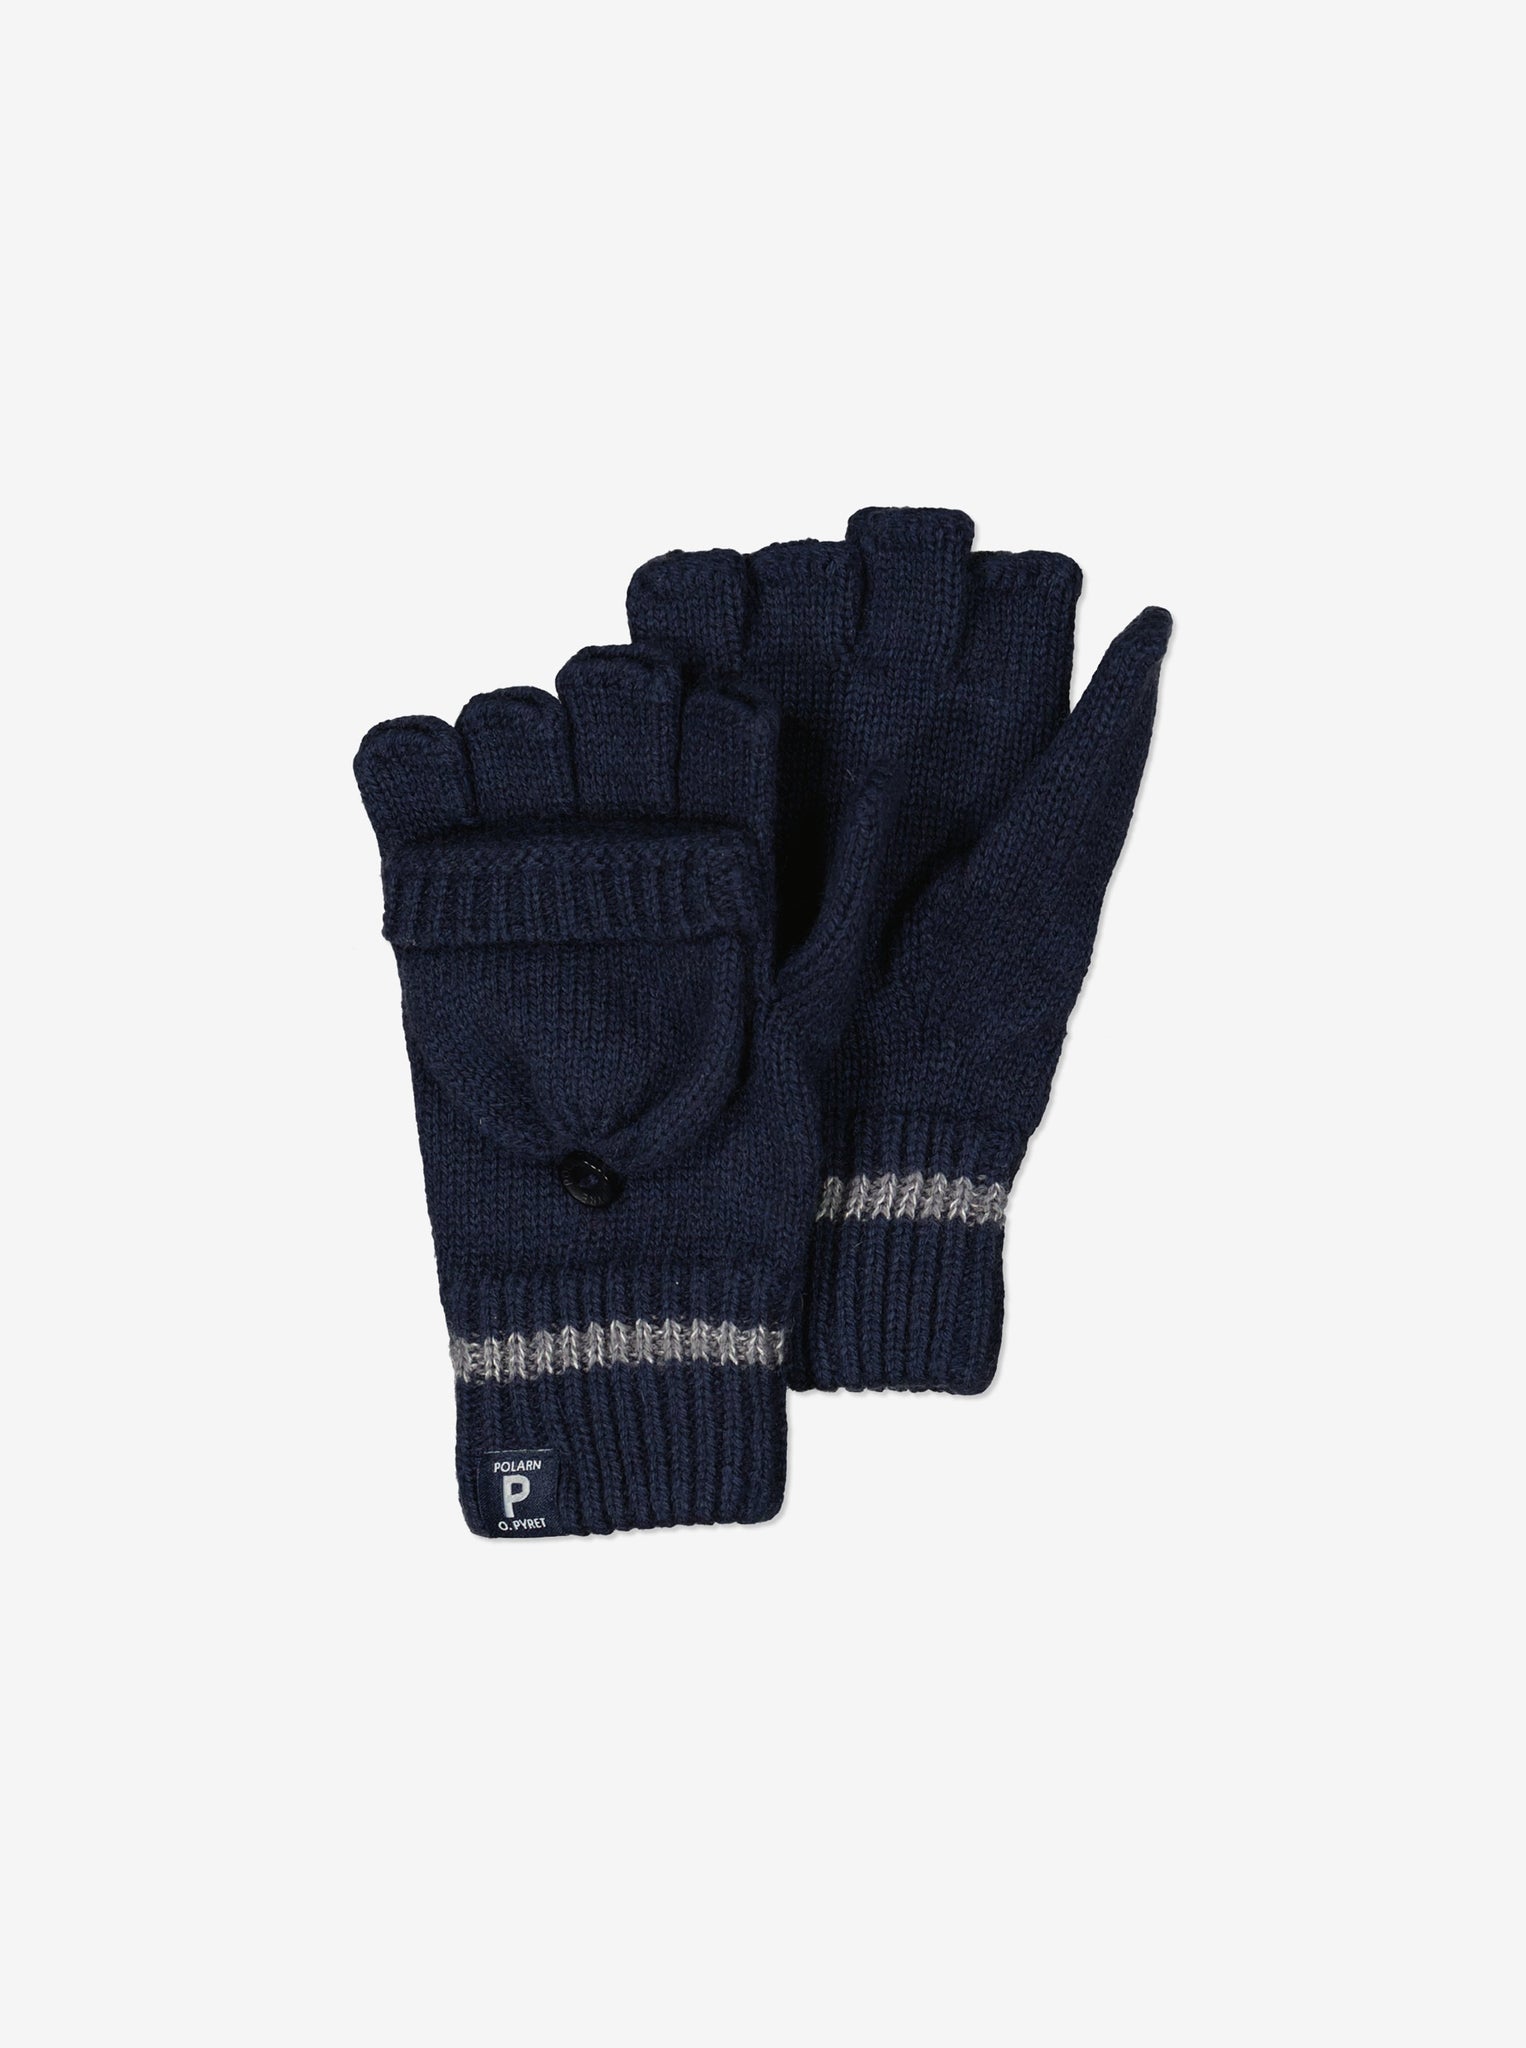 Navy Fingerless Kids Gloves from Polarn O. Pyret Kidswear. Warm kids gloves 